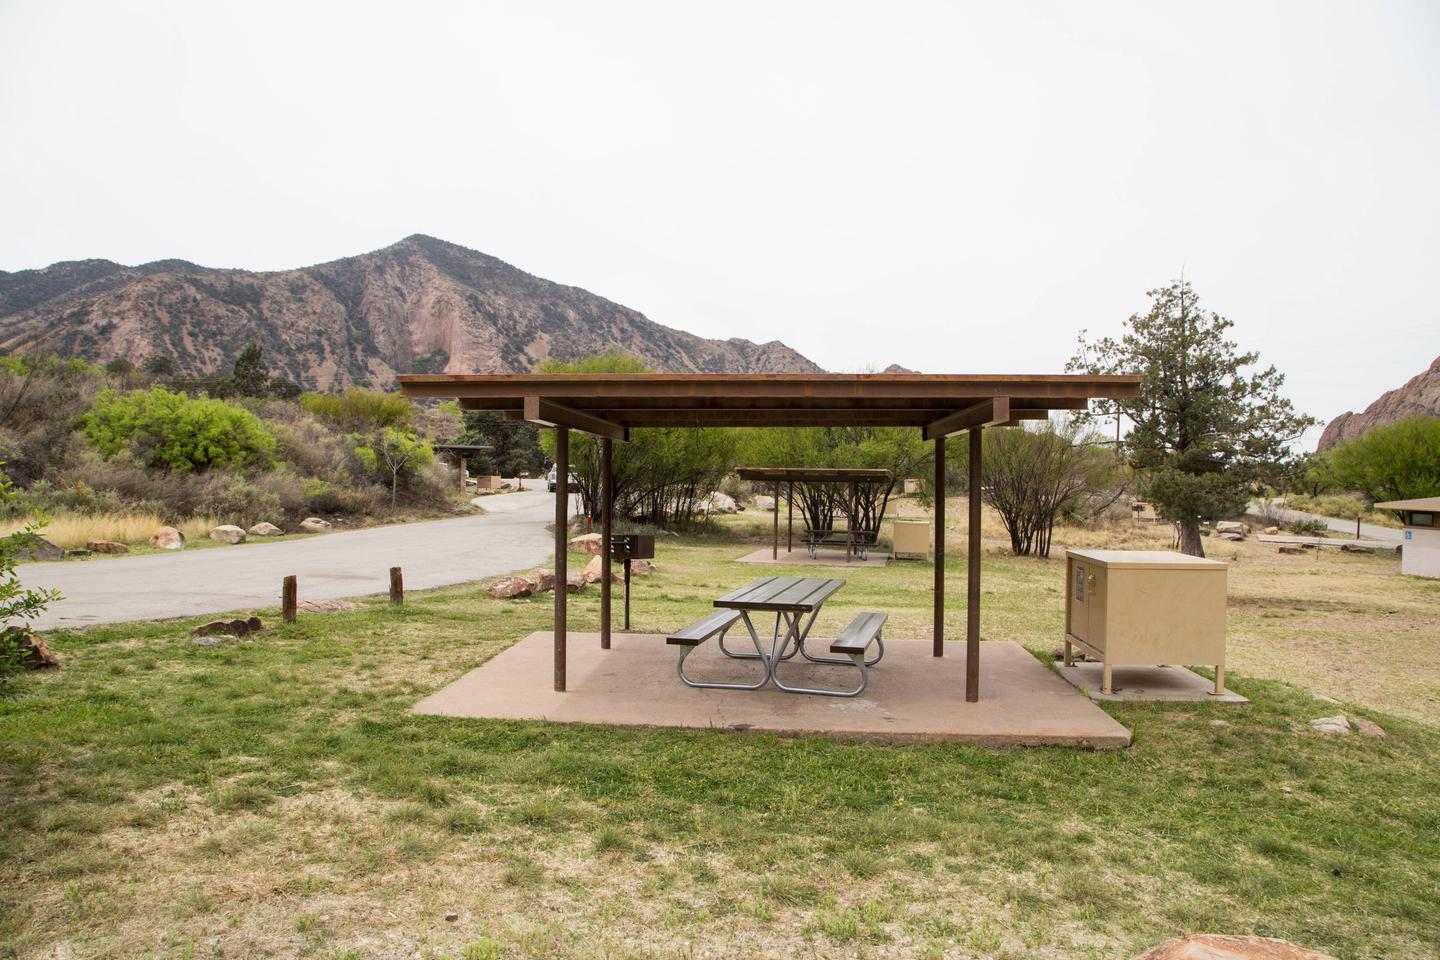 Chisos Basin Campsite #23 side viewShowing shade ramada, picnic table, and bear box